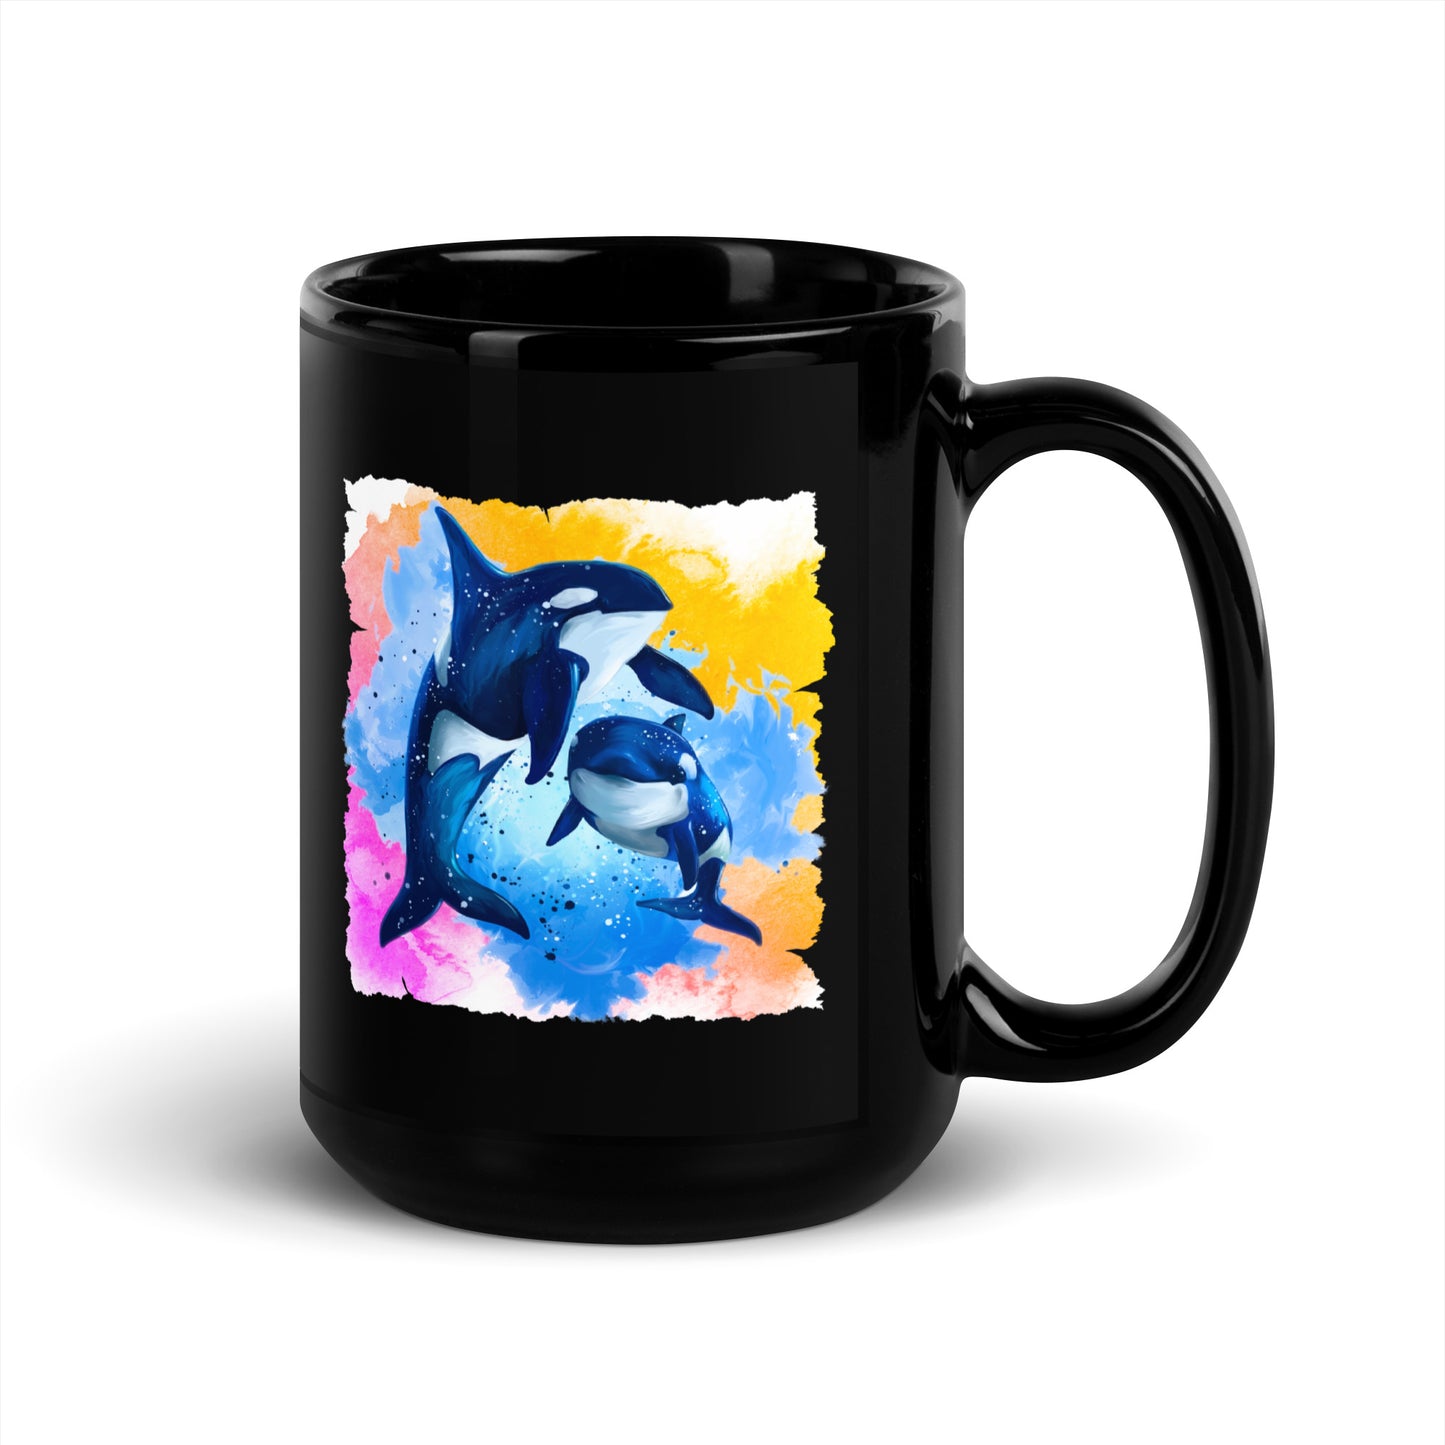 Orca Coffee Mug